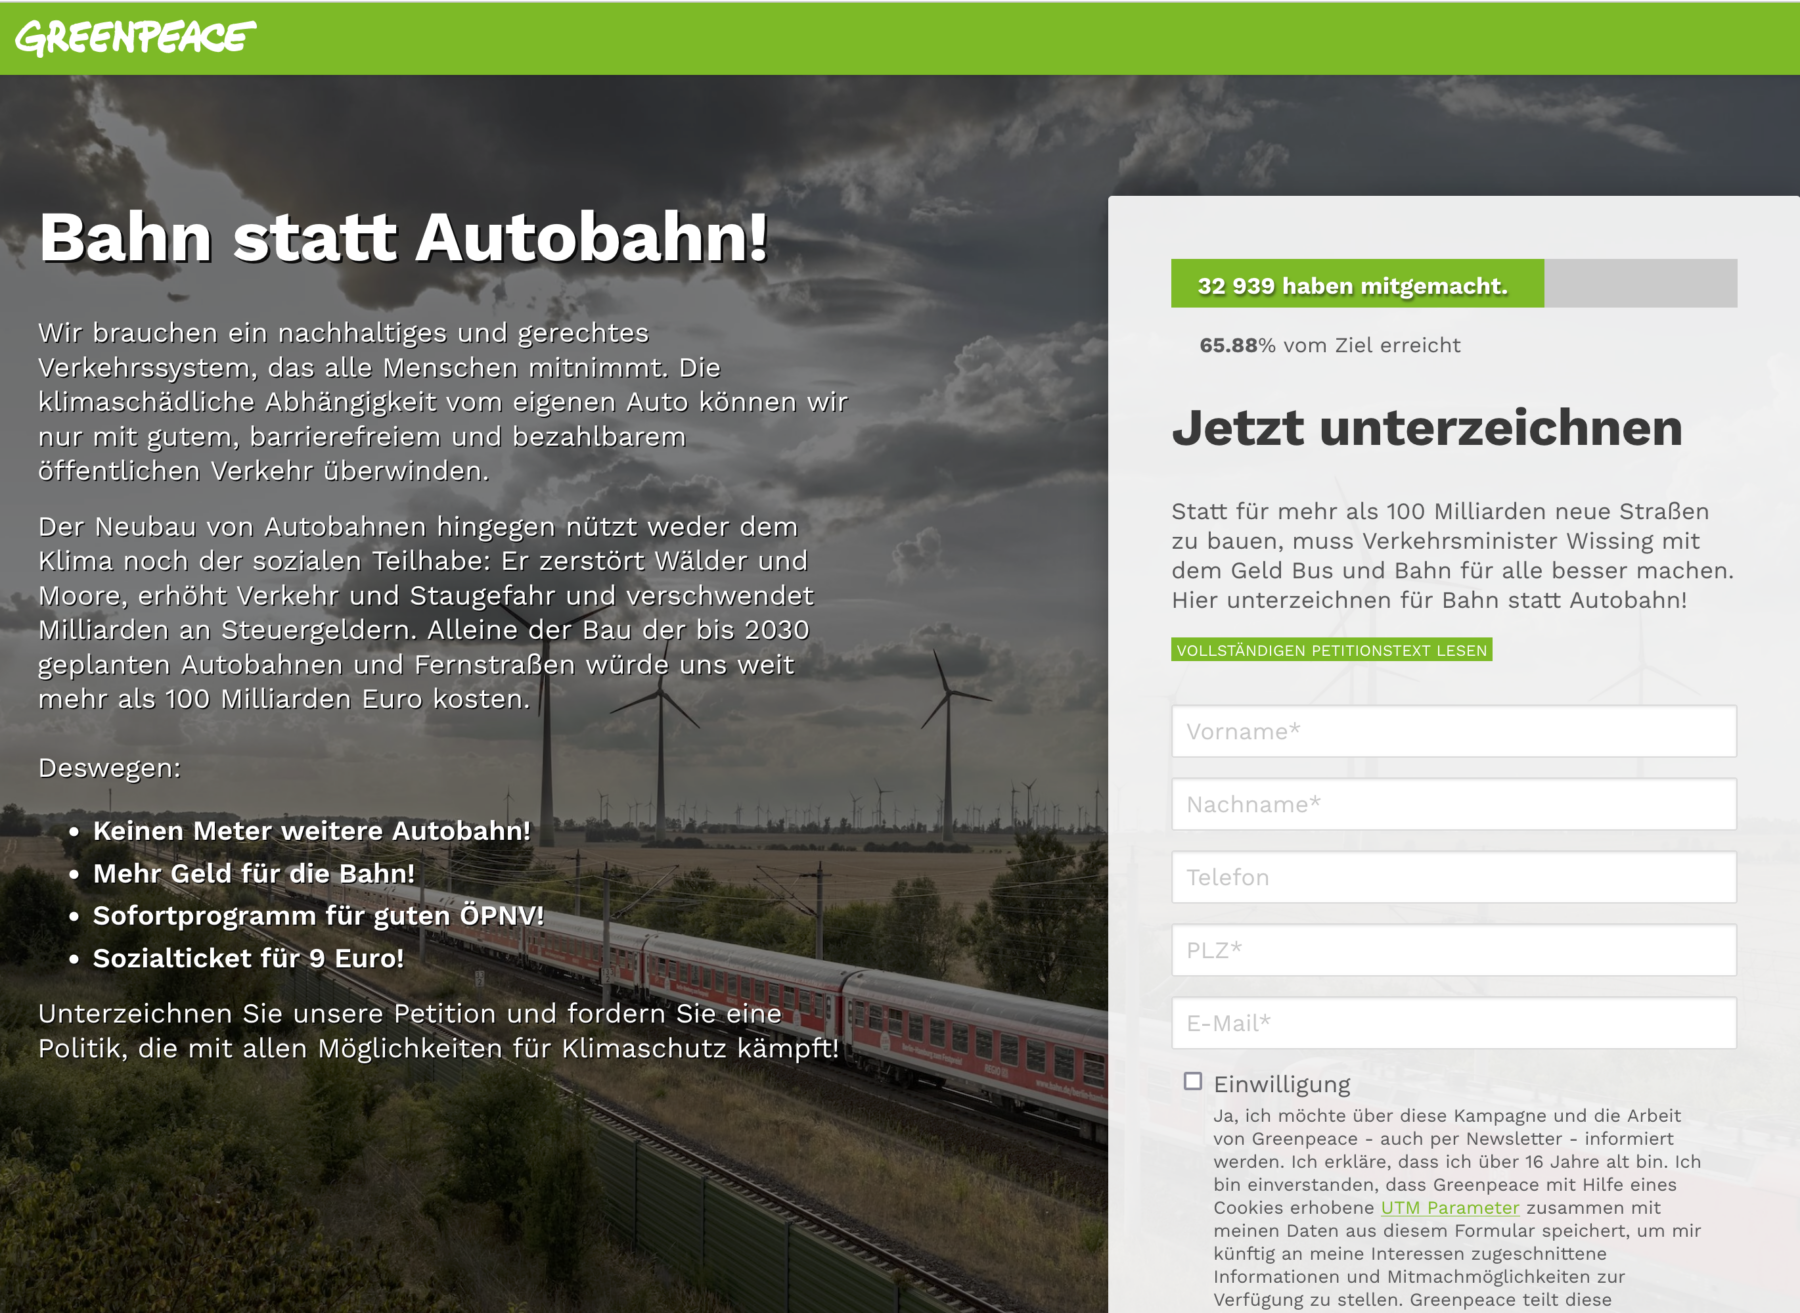 Greenpeace-Petition "Bahn statt Autobahn"